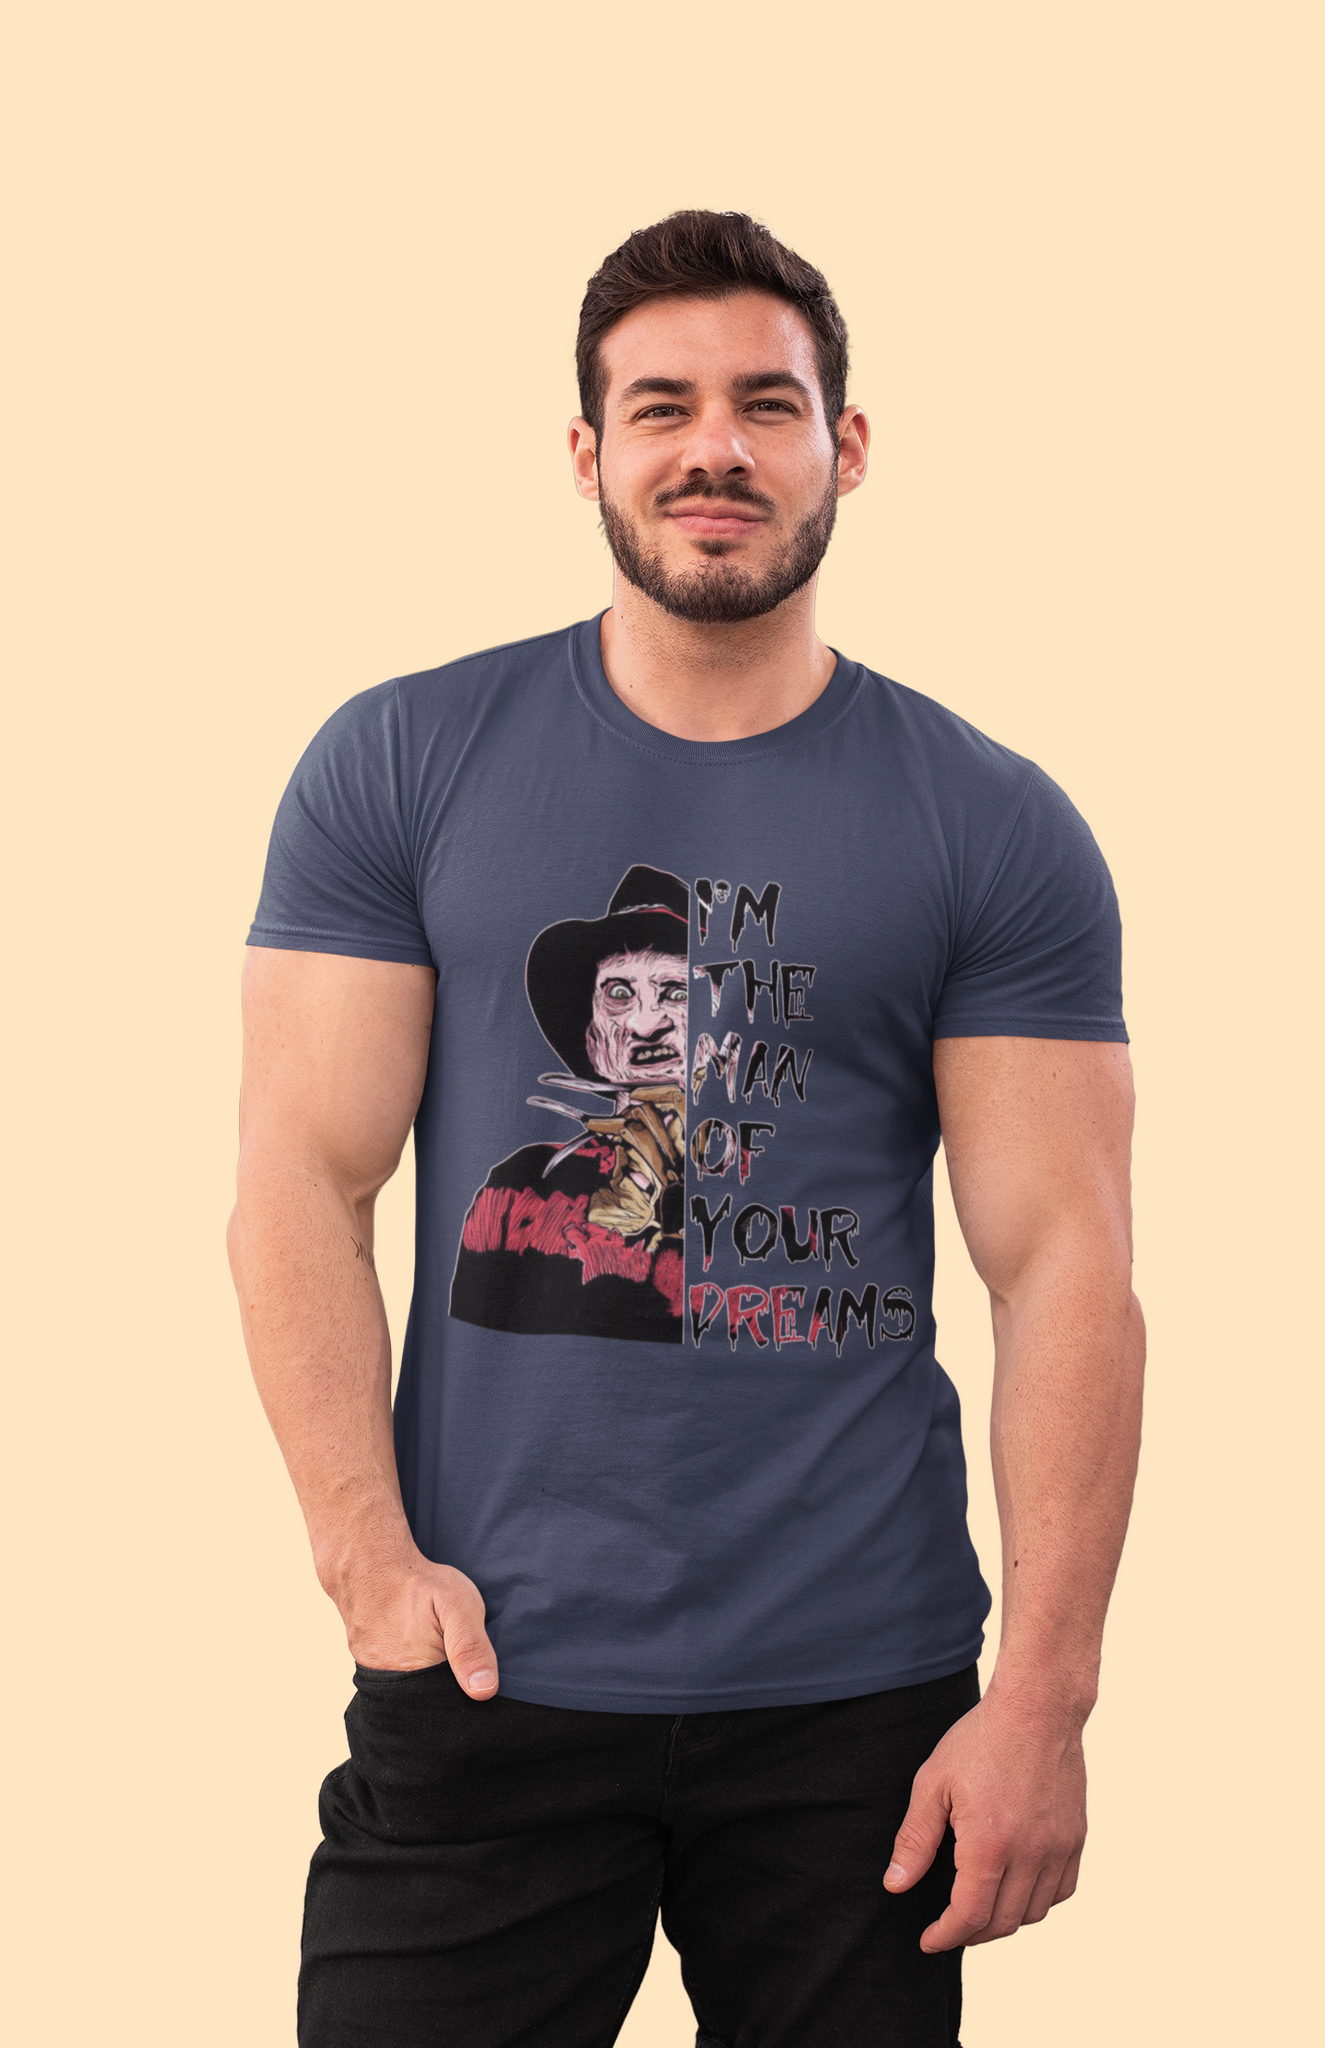 Nightmare On Elm Street T Shirt, Freddy Krueger T Shirt, Im The Man Of Your Dreams Tshirt, Halloween Gifts